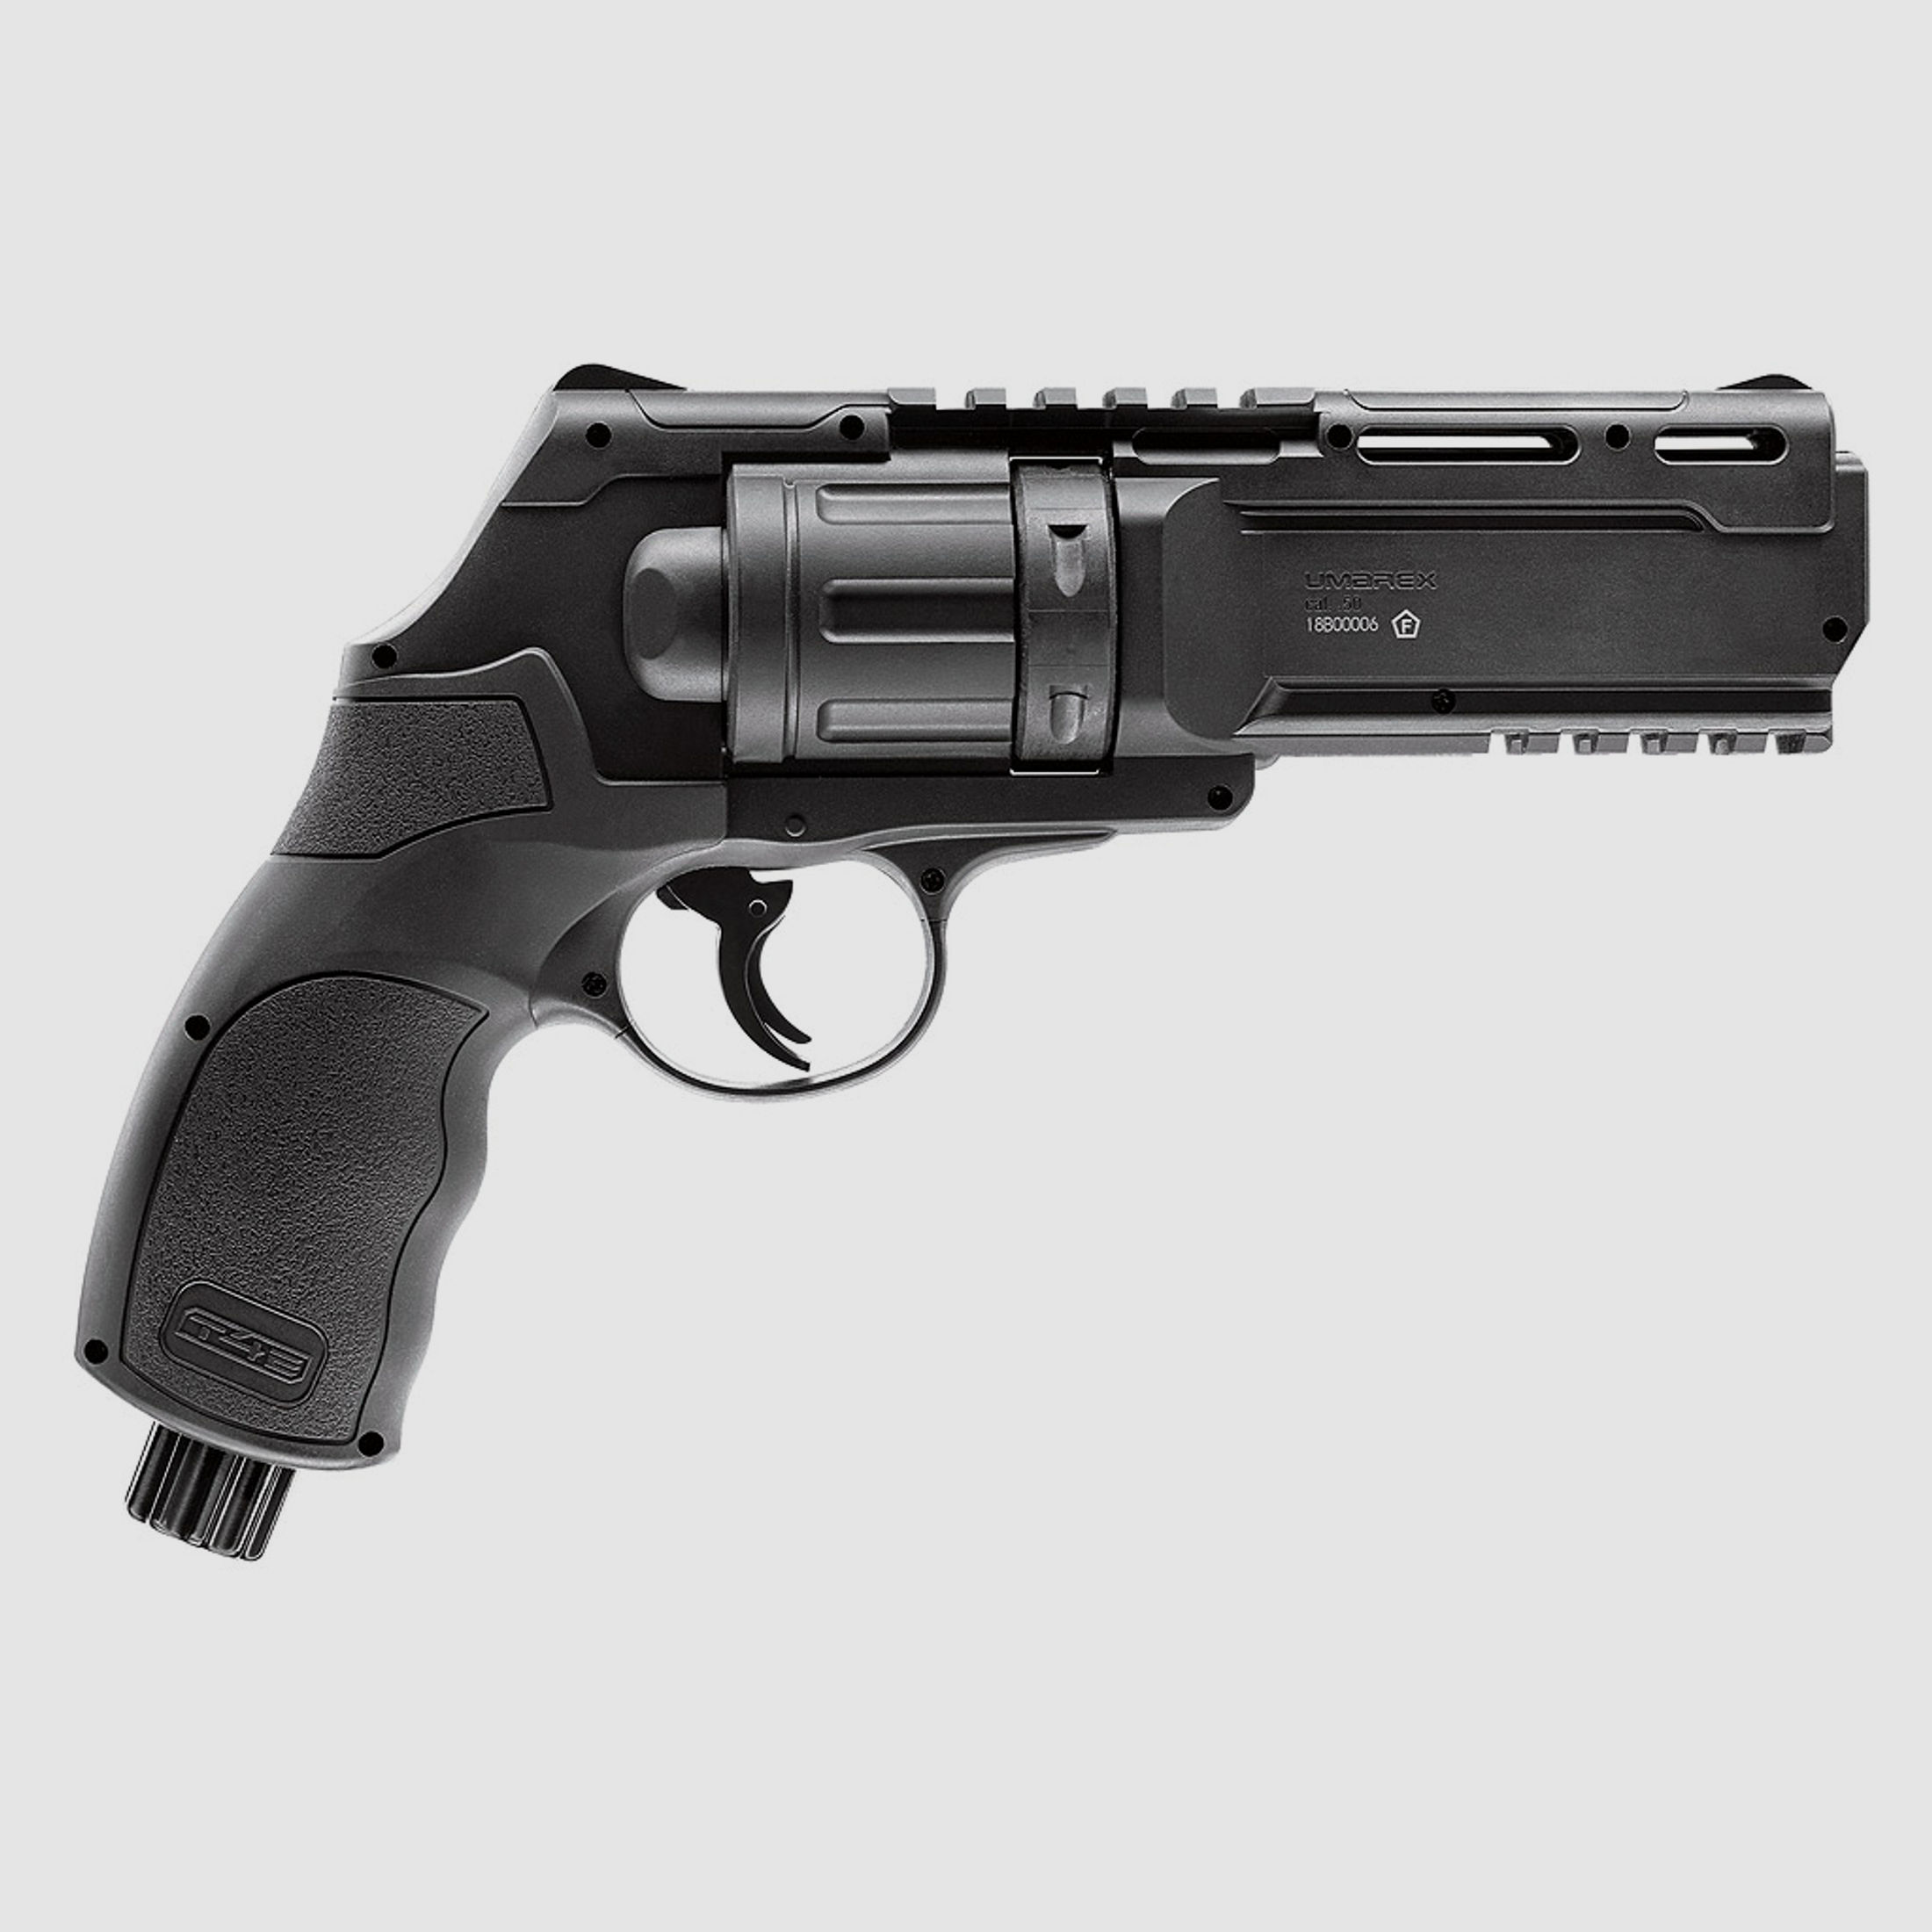 CO2 Markierer Home Defense Revolver Umarex T4E HDR 50 fĂĽr Gummi-, Pfeffer- und Farbkugeln Kaliber .50 (P18)